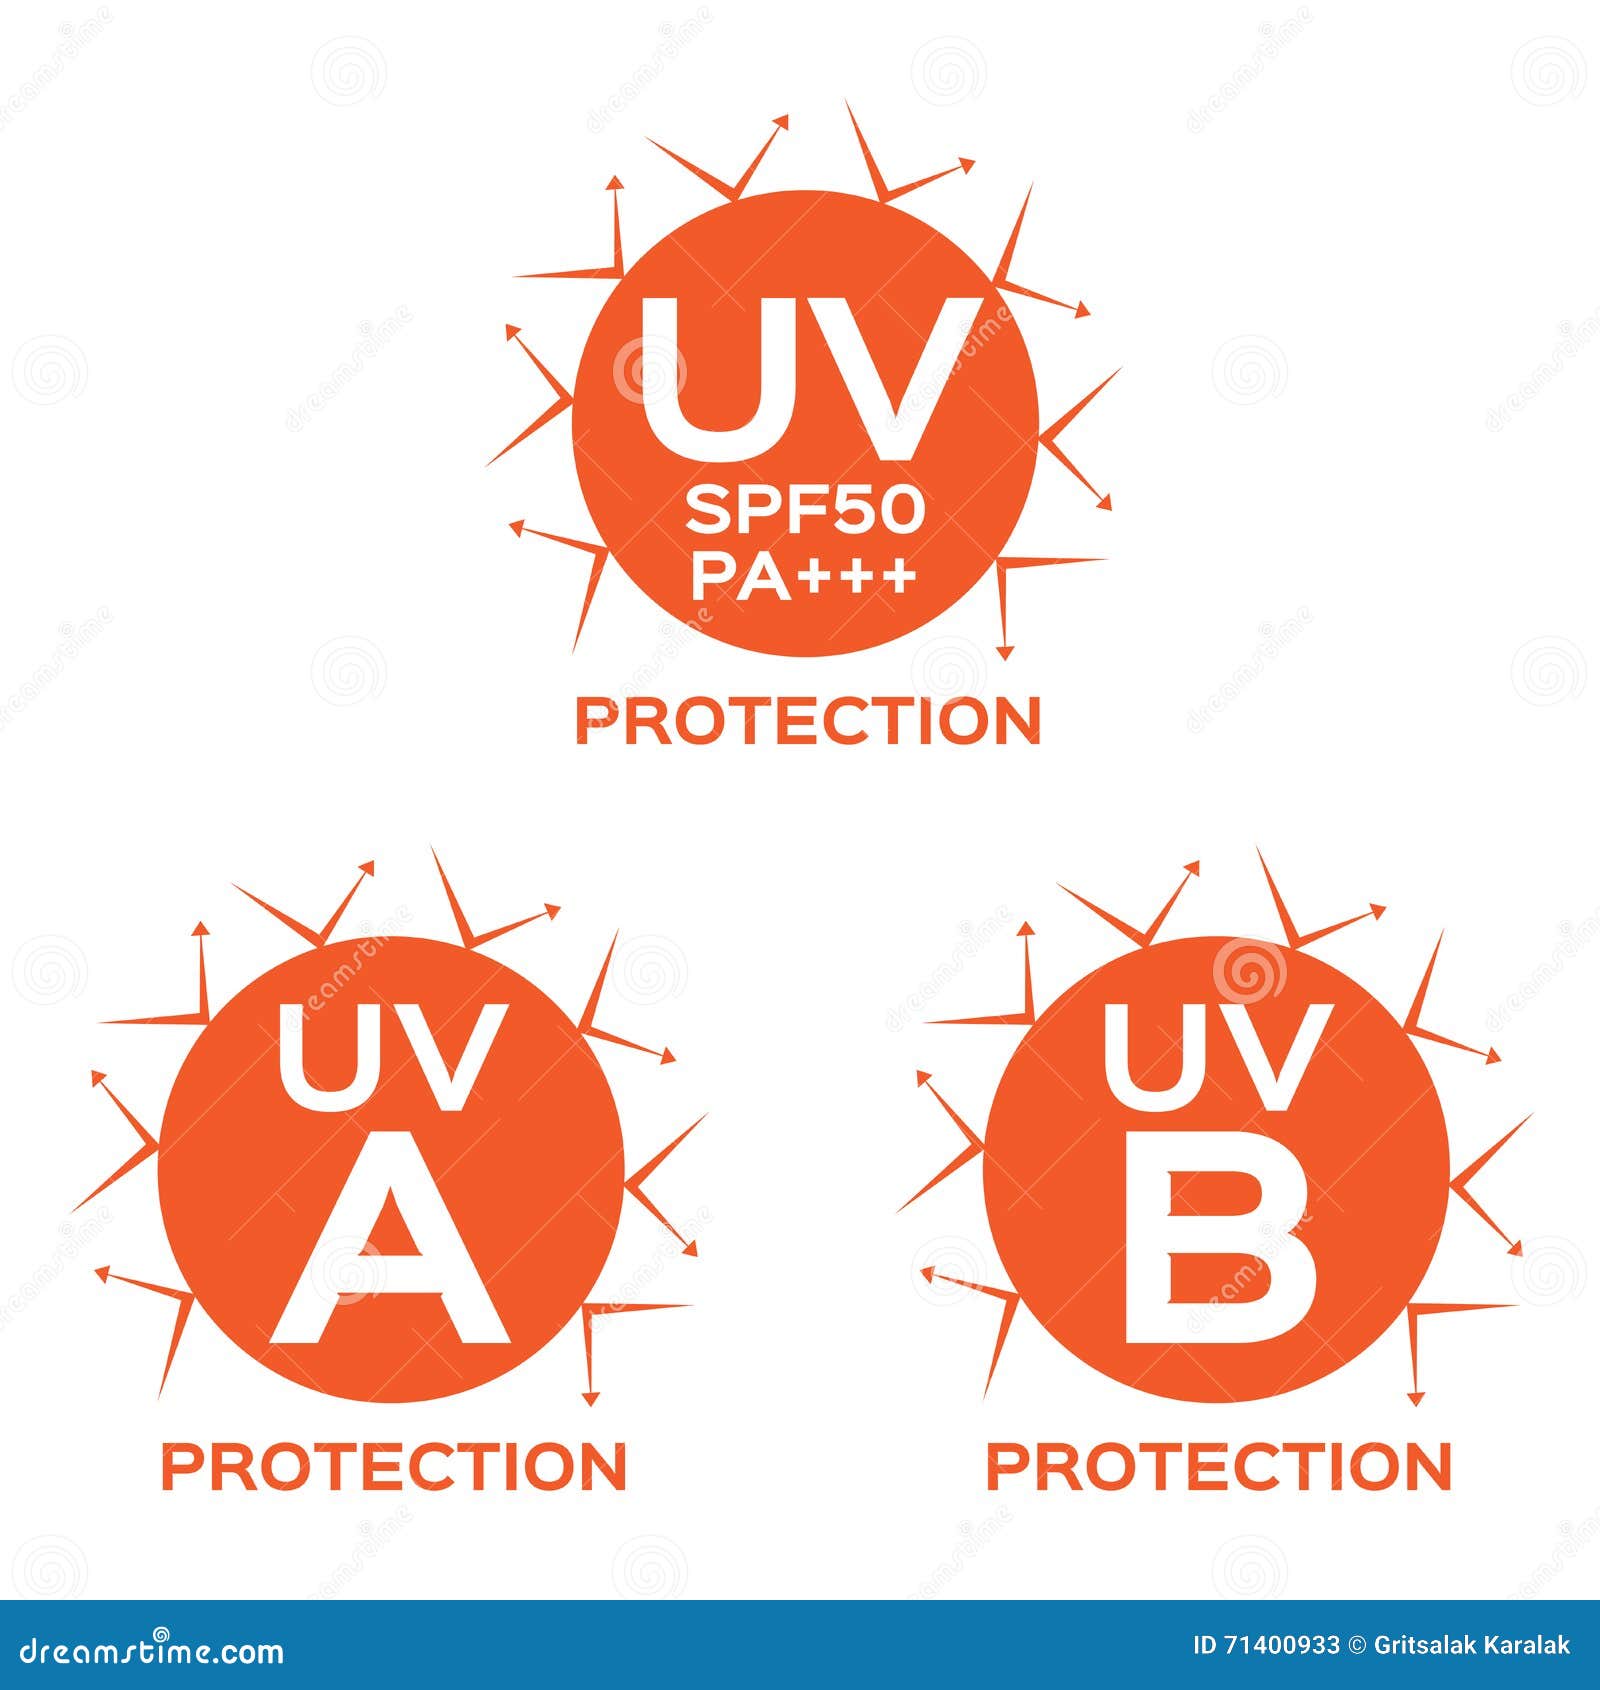 uv logo , uva uvb and spf with orange color